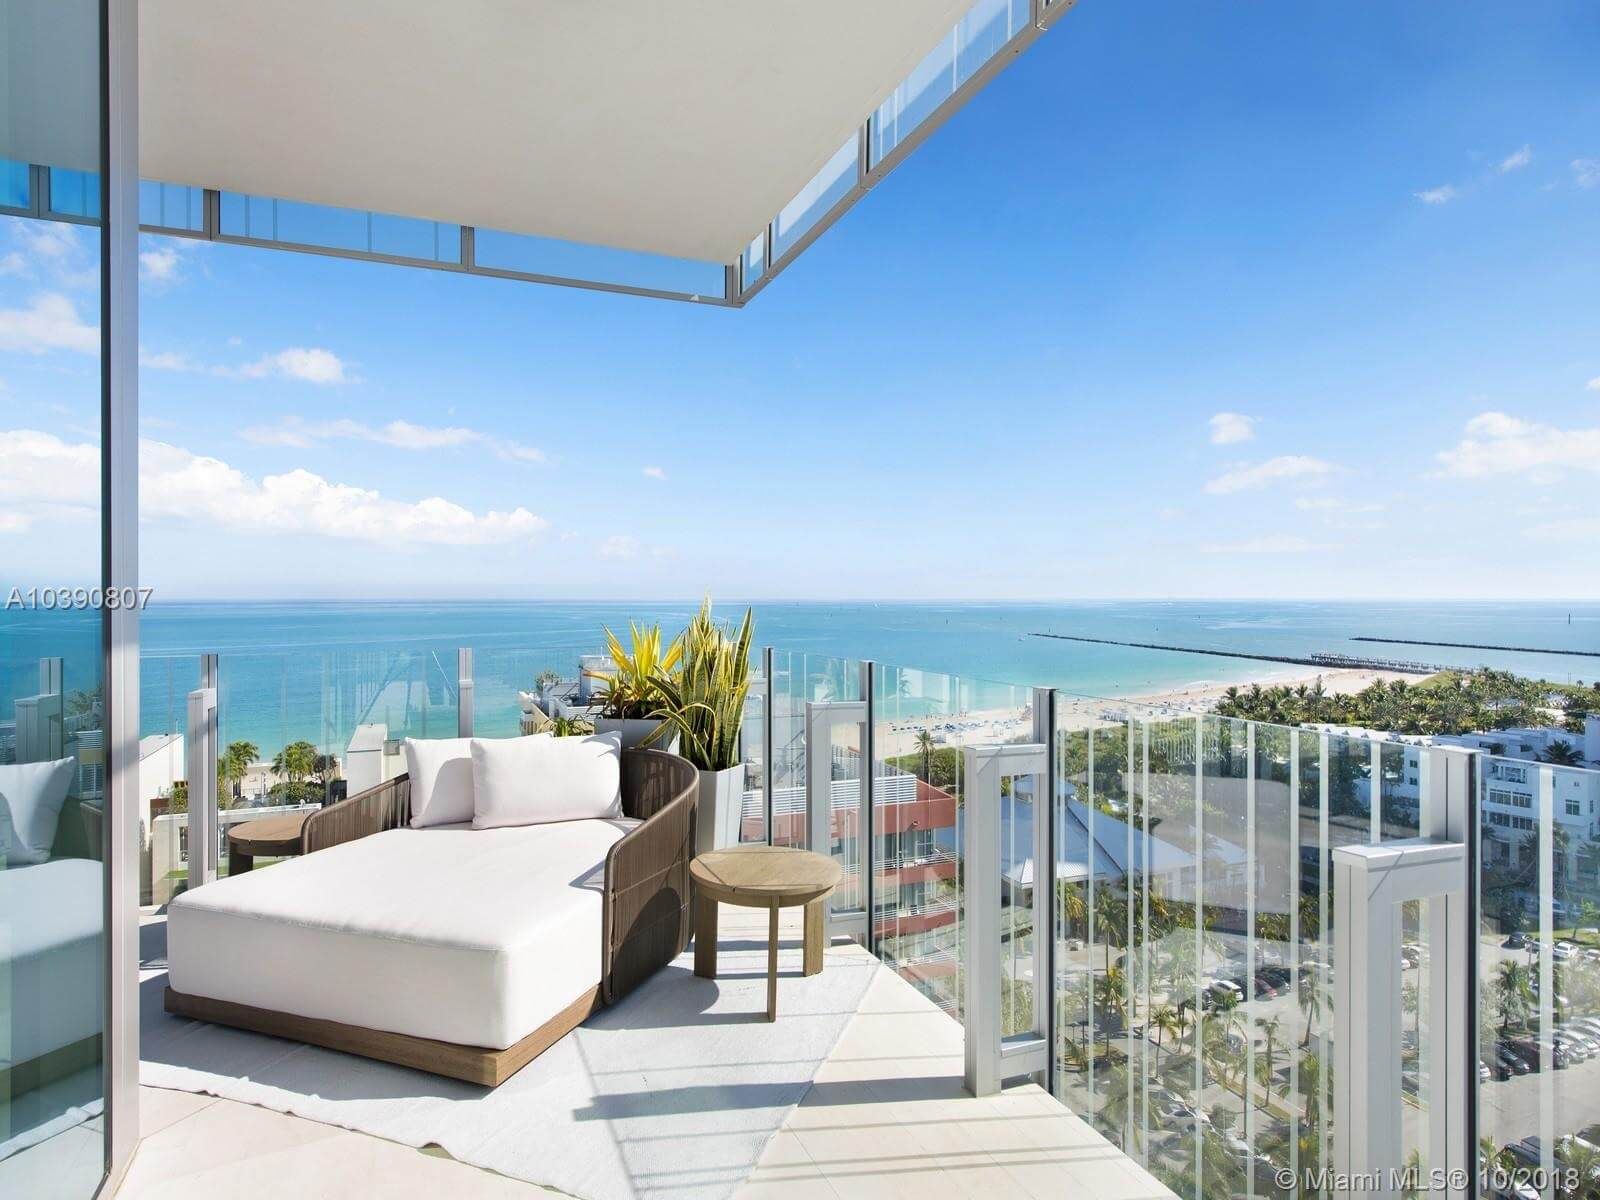 Glass Майами-Бич — Вид с Балкона